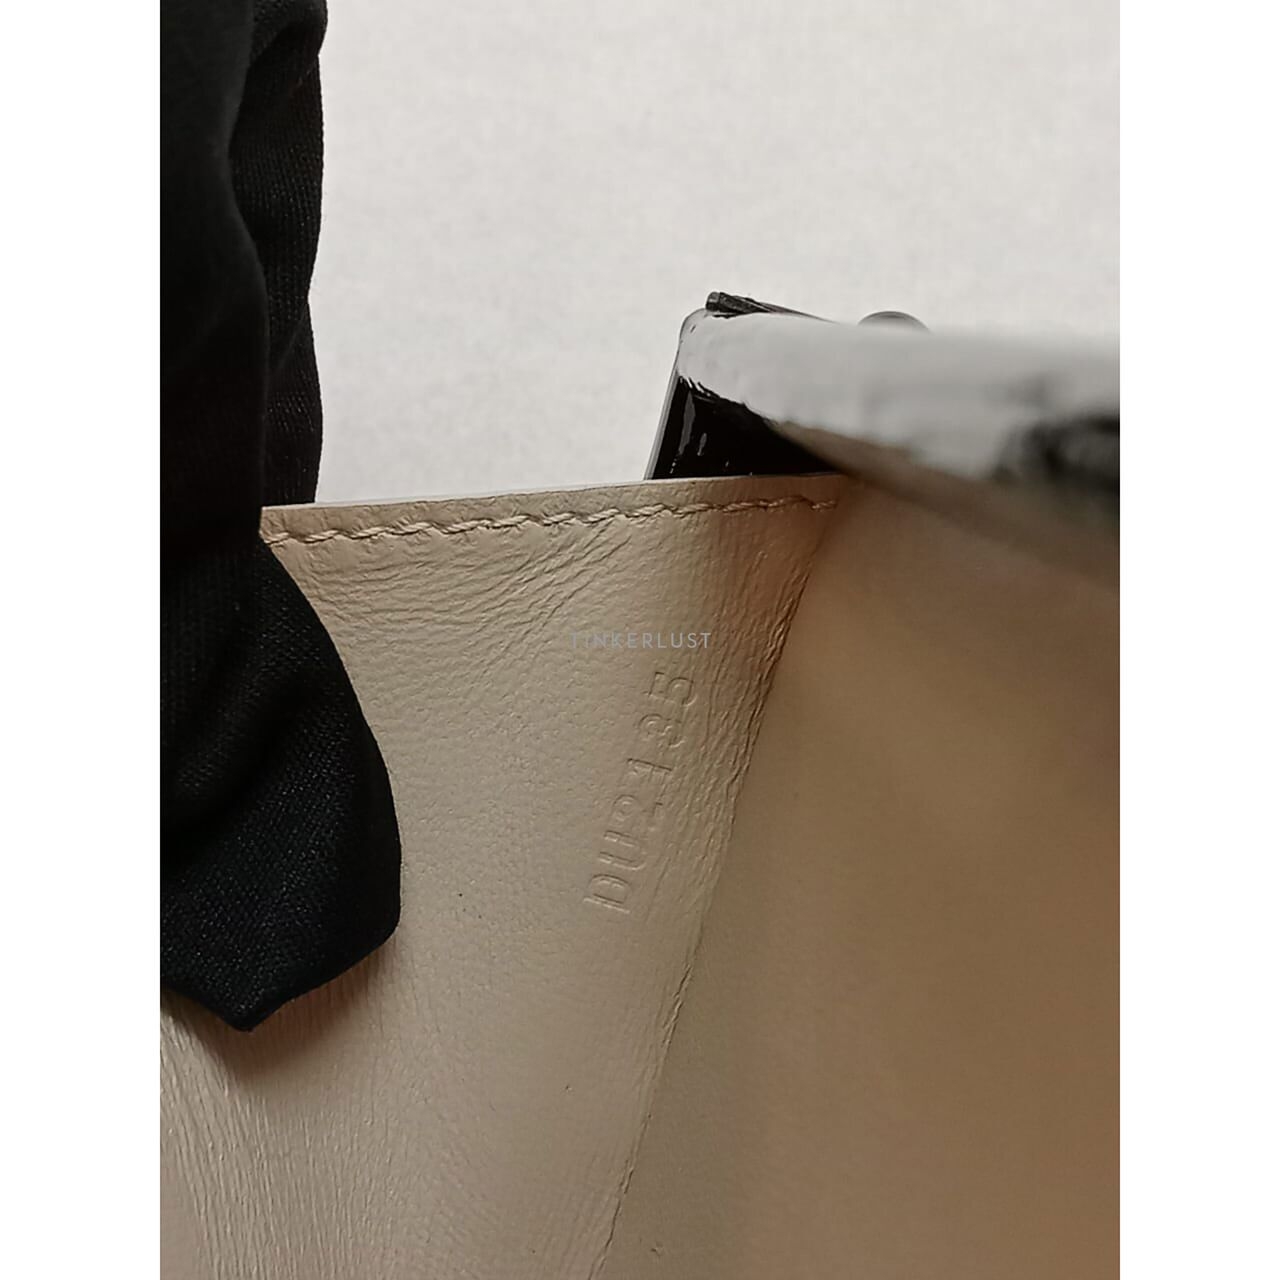 Louis Vuitton Petite Malle In Bicolour Epi Leather 2015 Sling Bag